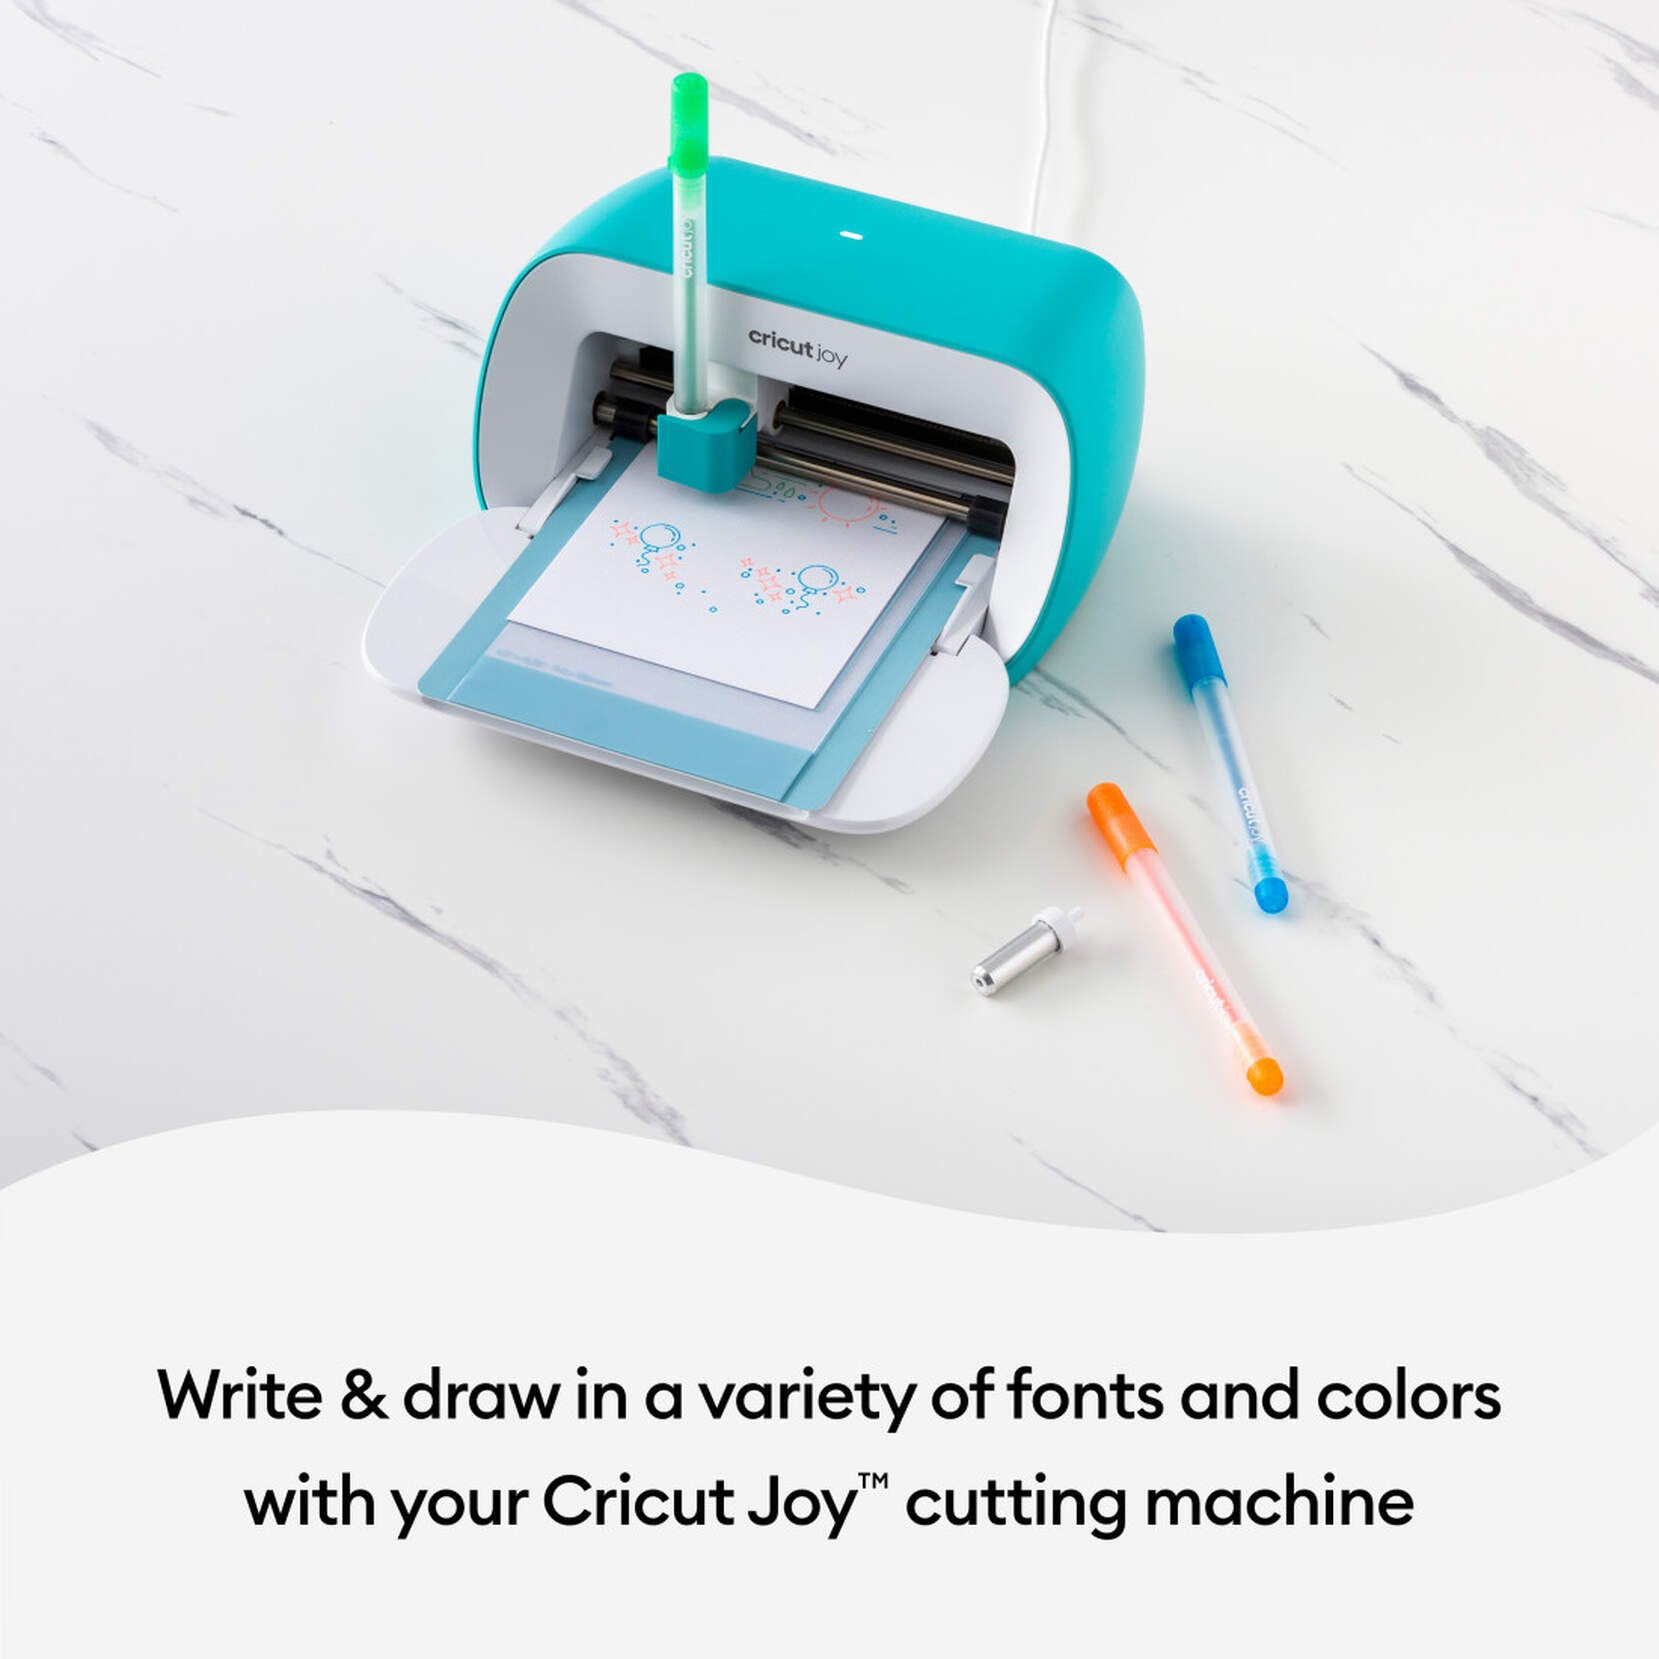 Cricut Joy Glitter Gel Rainbow Pen Set 10Ct